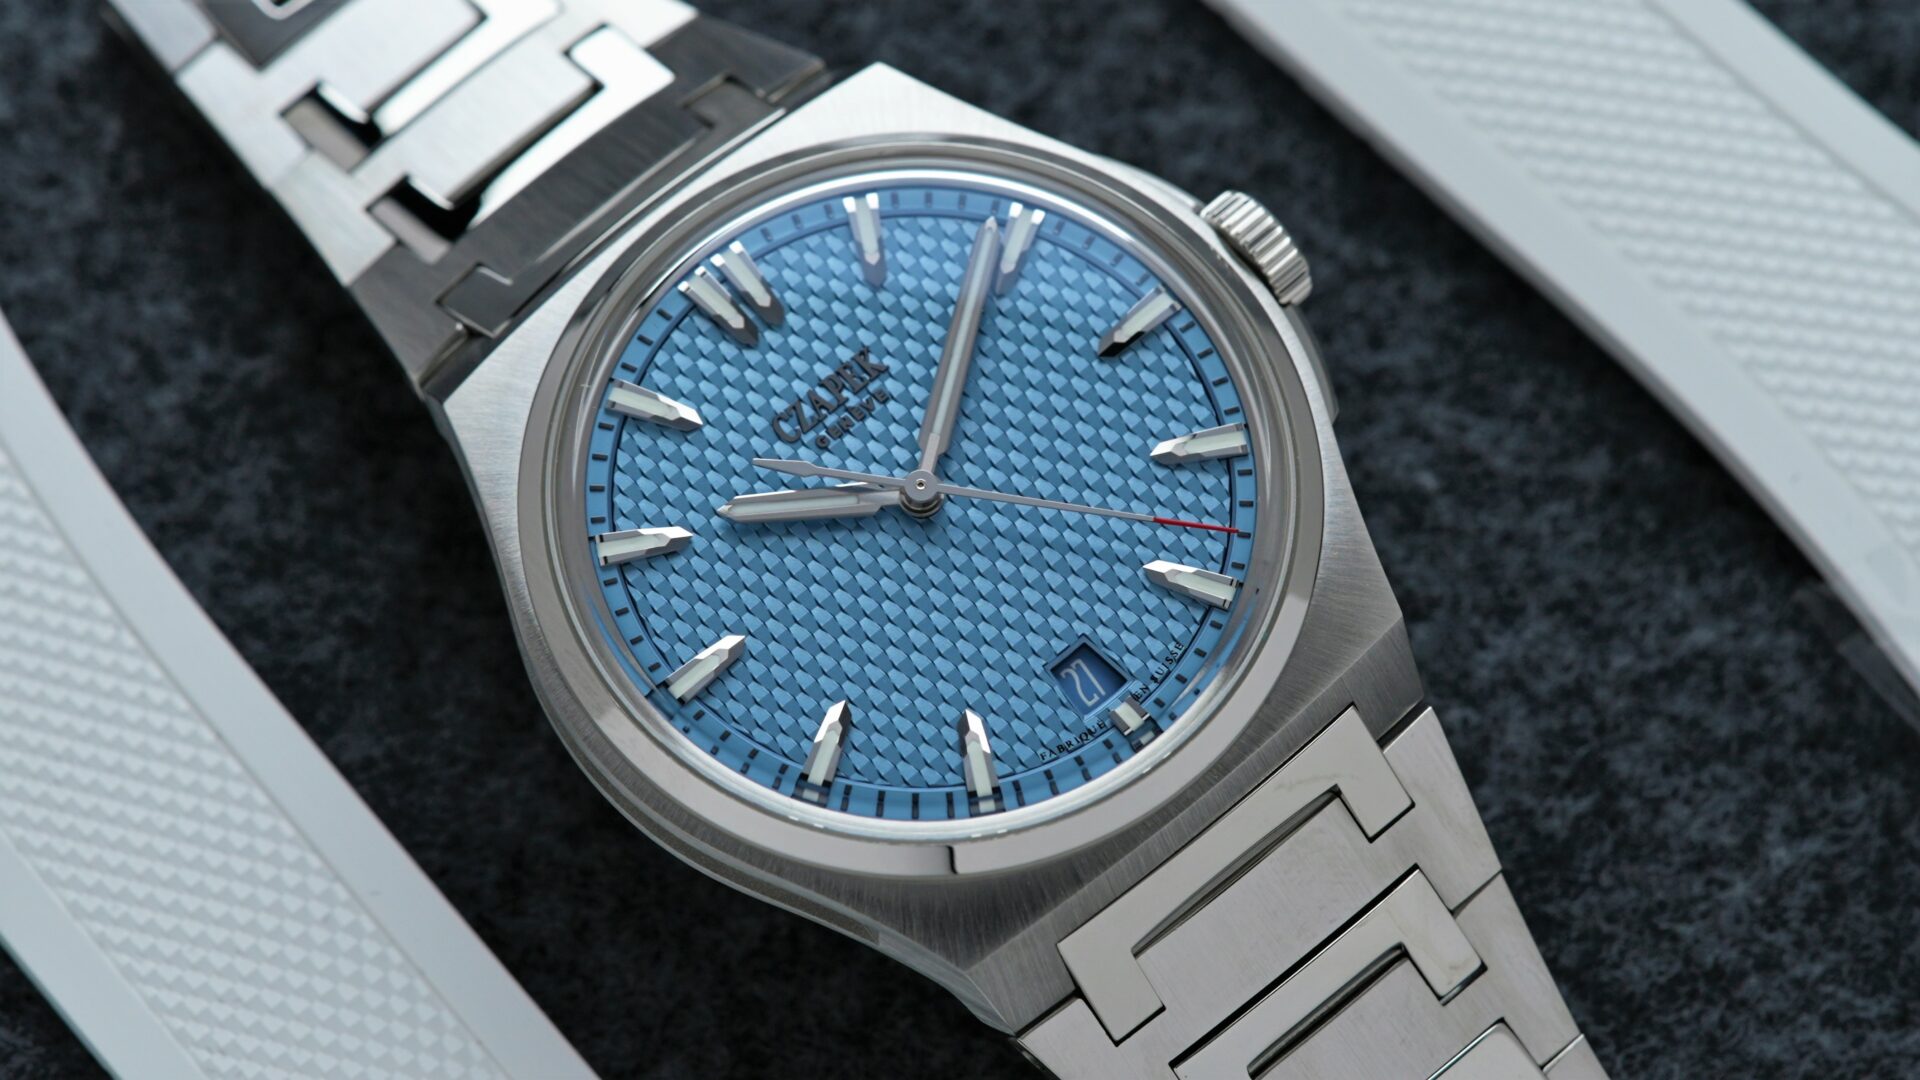 Czapek Passage de Drake Rare Glacier Blue Limited Production watch featured with extra white rubber strap.